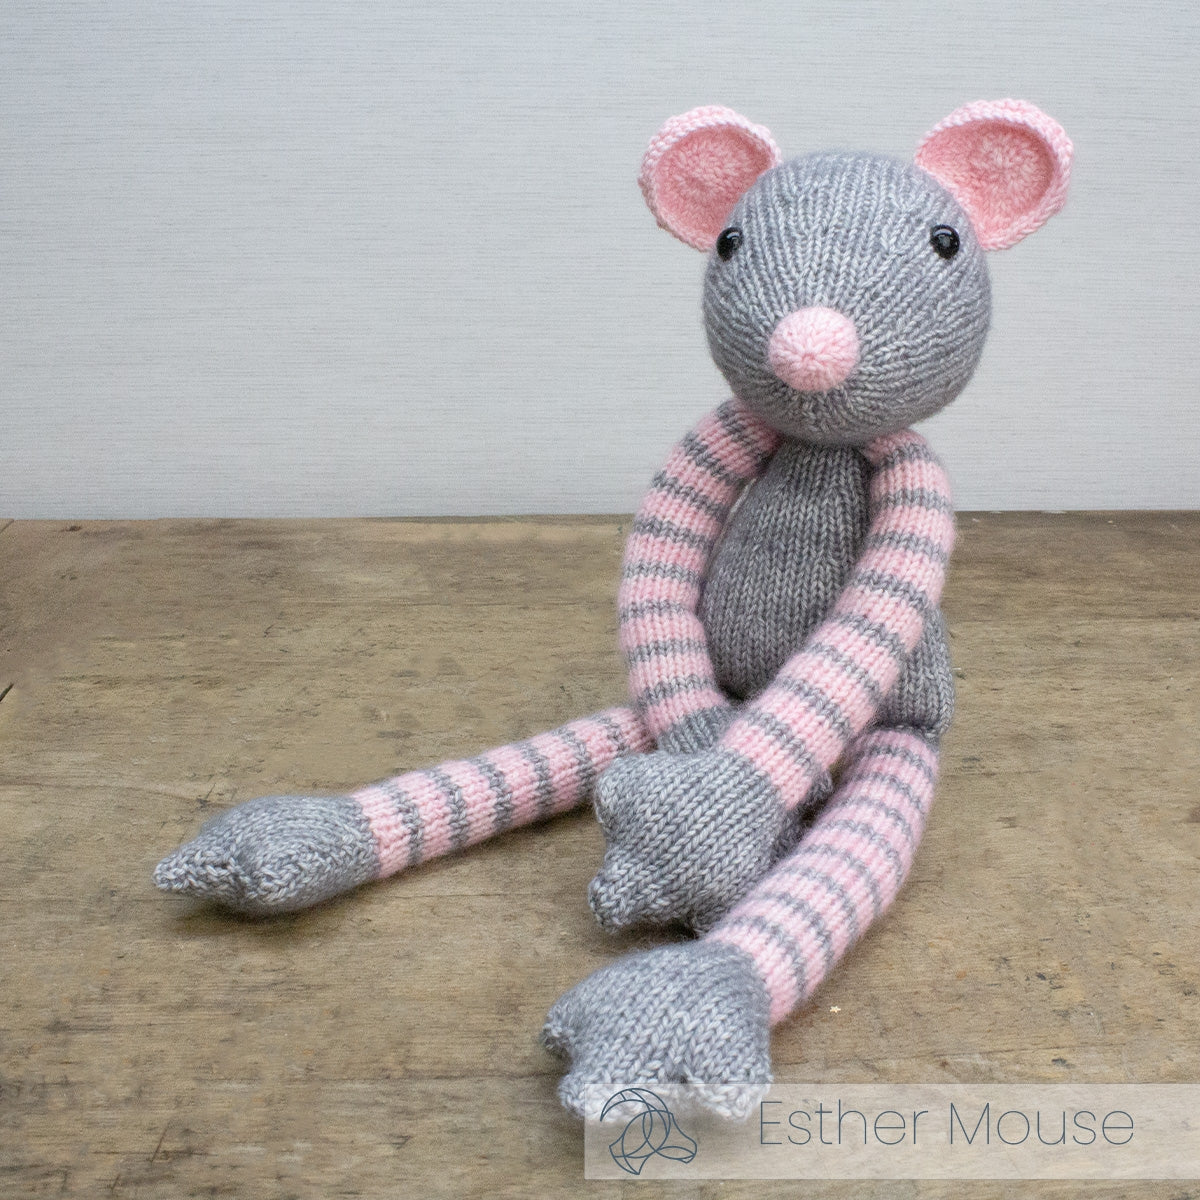 Hardicraft - DIY Knitting Kit - Esther Mouse